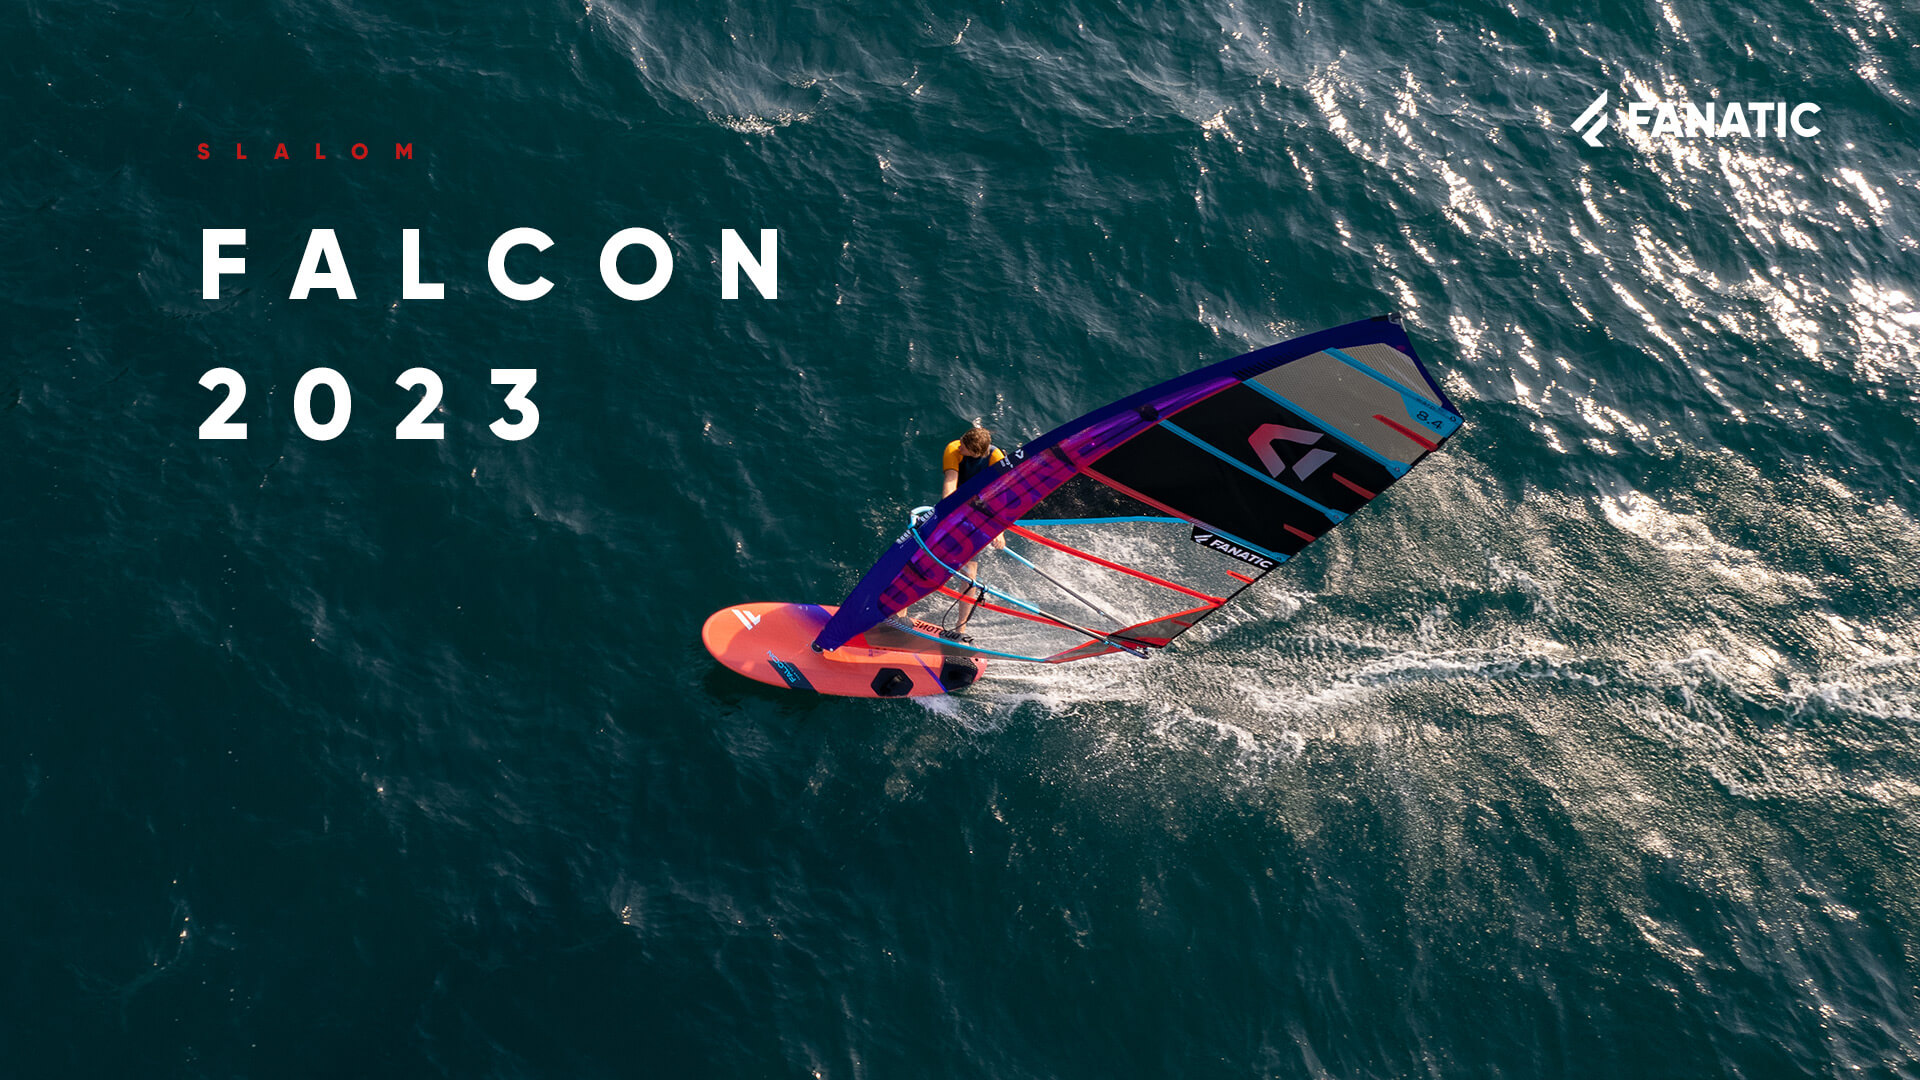 Fanatic Falcon 2023 - Slalom - Product Clip